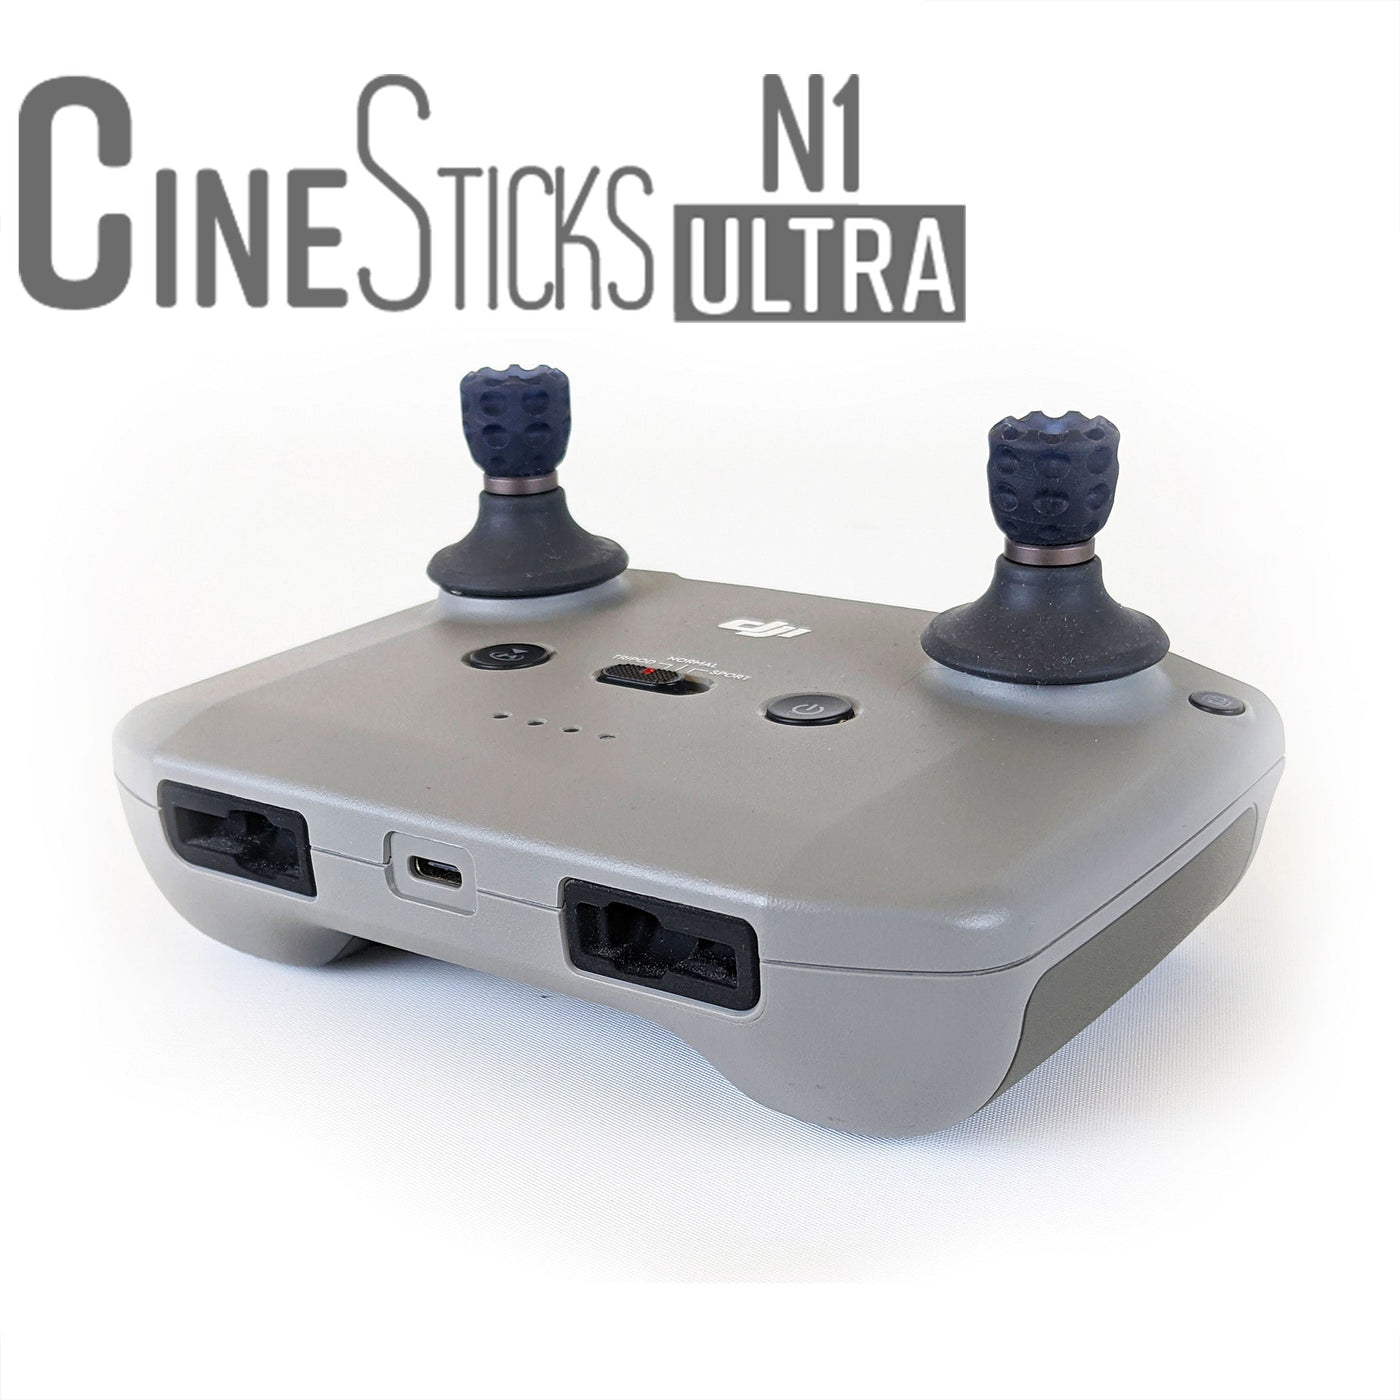 CineSticks N1 Pro - Reino Unido